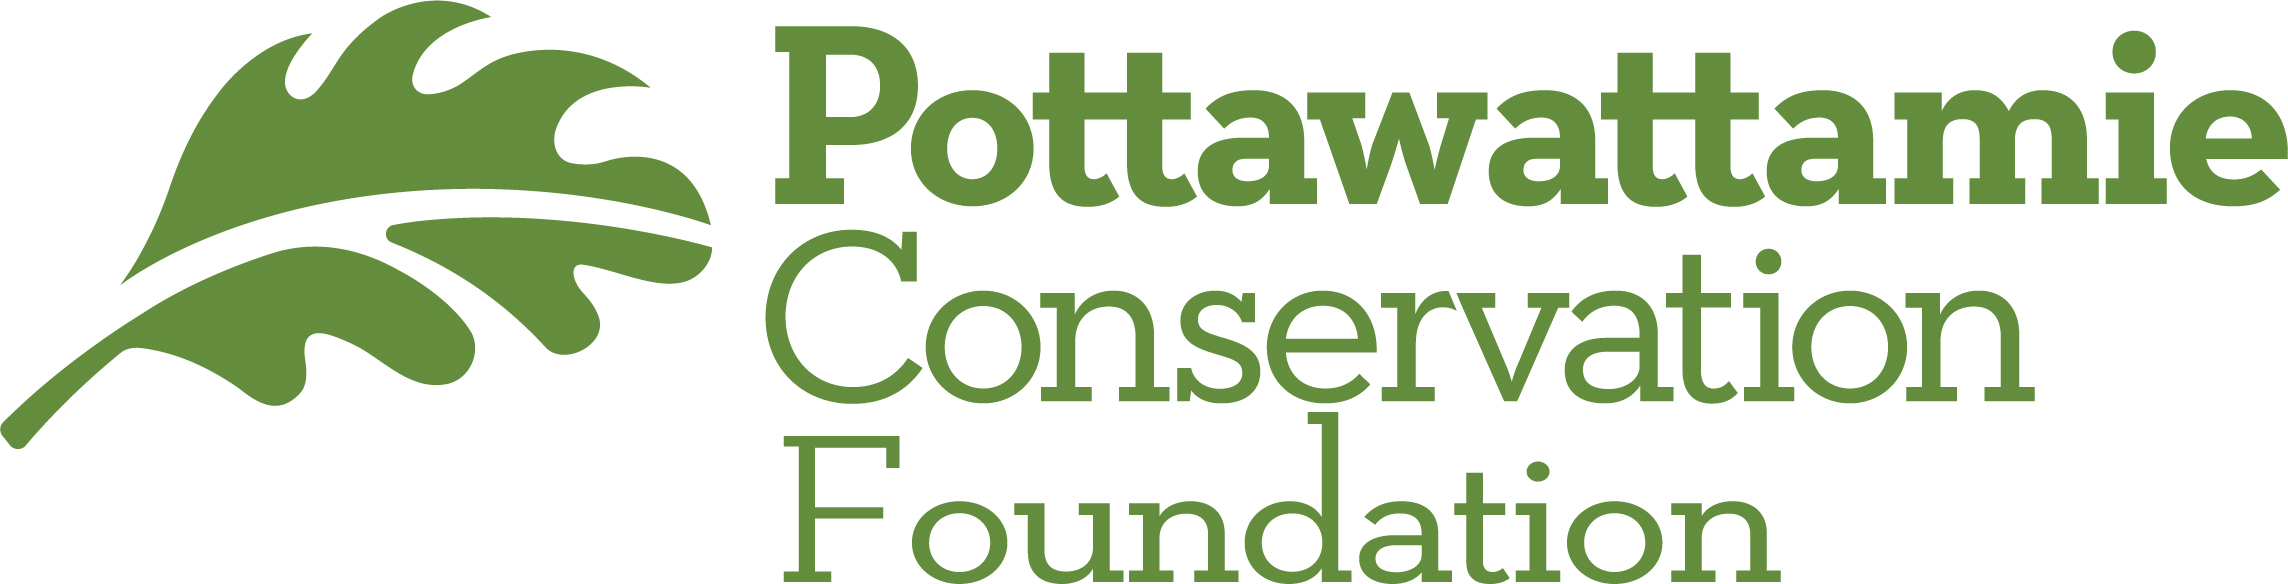 Pottawattamie Conservation Foundation Logo